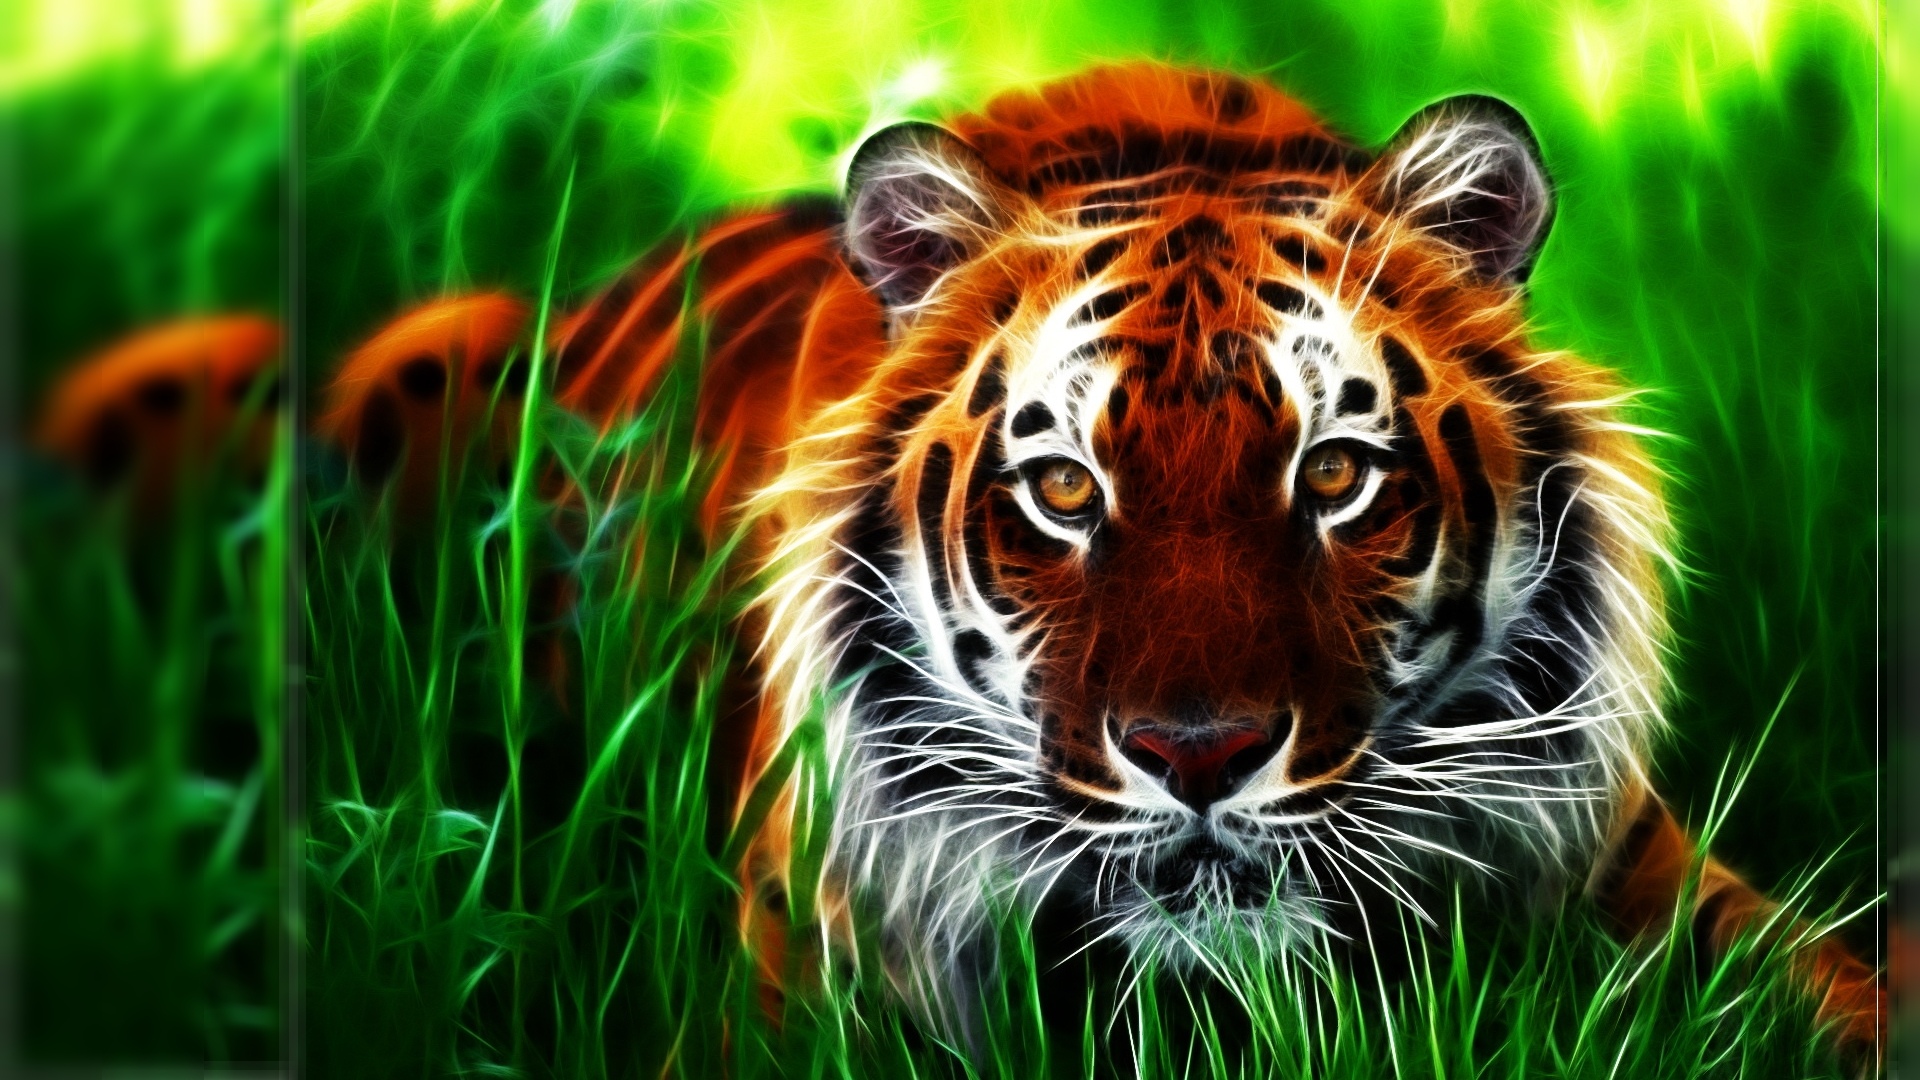 Tiger Fractal Face Eyes Pattern Stripes Grass Art Wallpaper Background